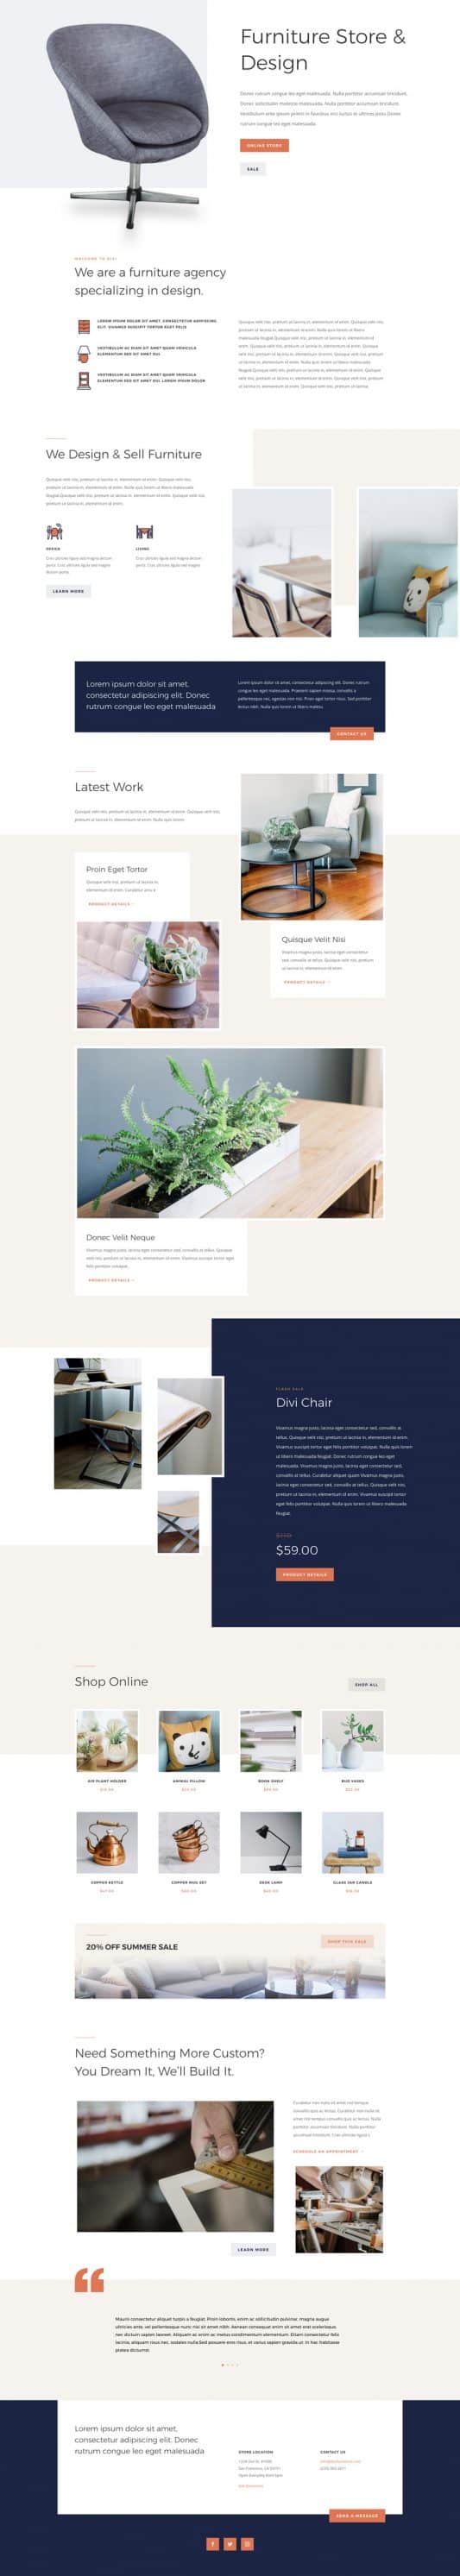 Furniture Store Web Design 5